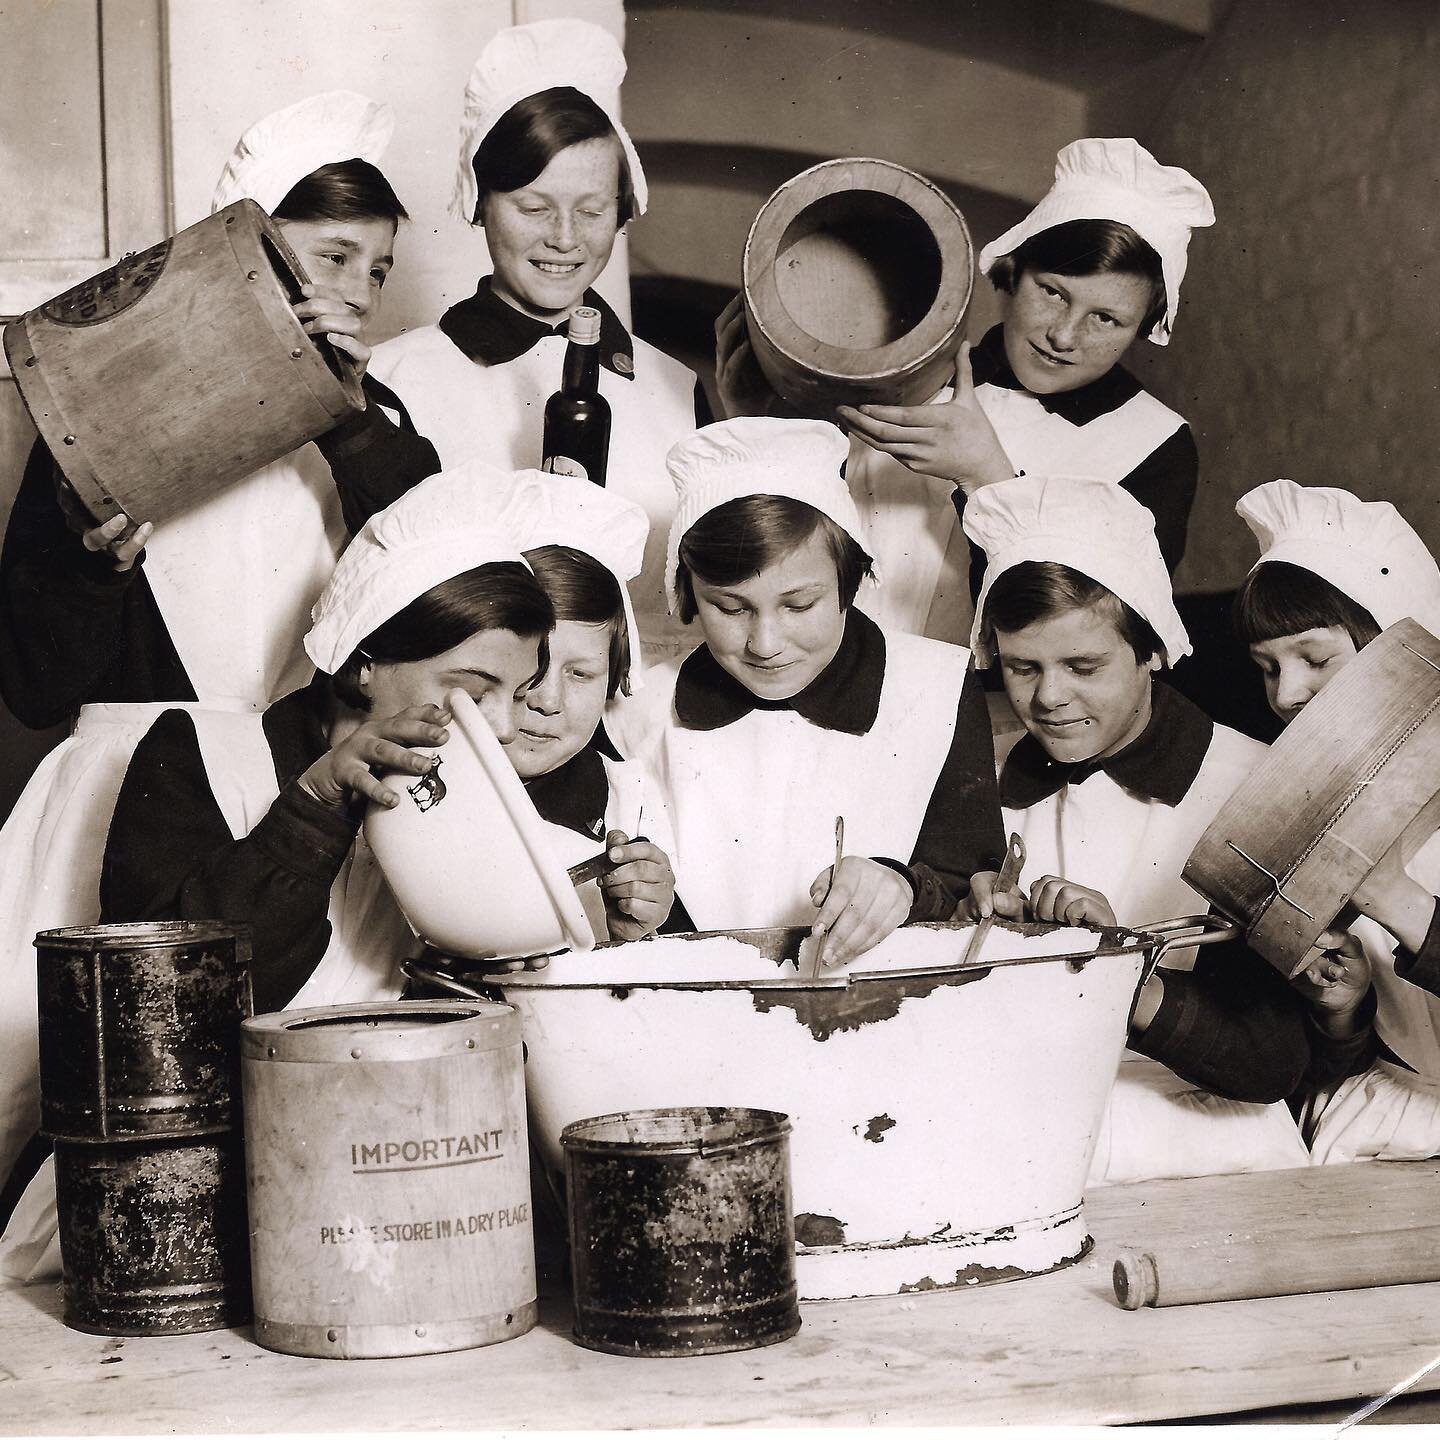 Foundlings pretend to prepare a meal for the camera, circa 1930